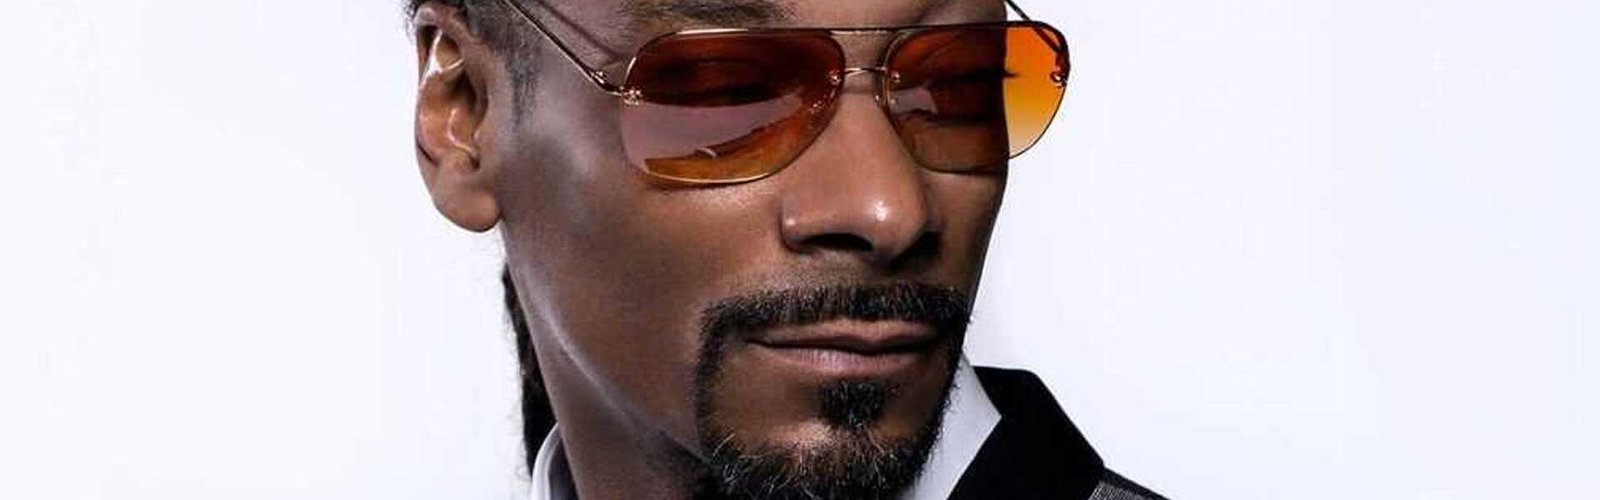 Snoop Dogg, American rapper and record producer, Celebrity Entrepreneur, Snoop Dogg Biography,